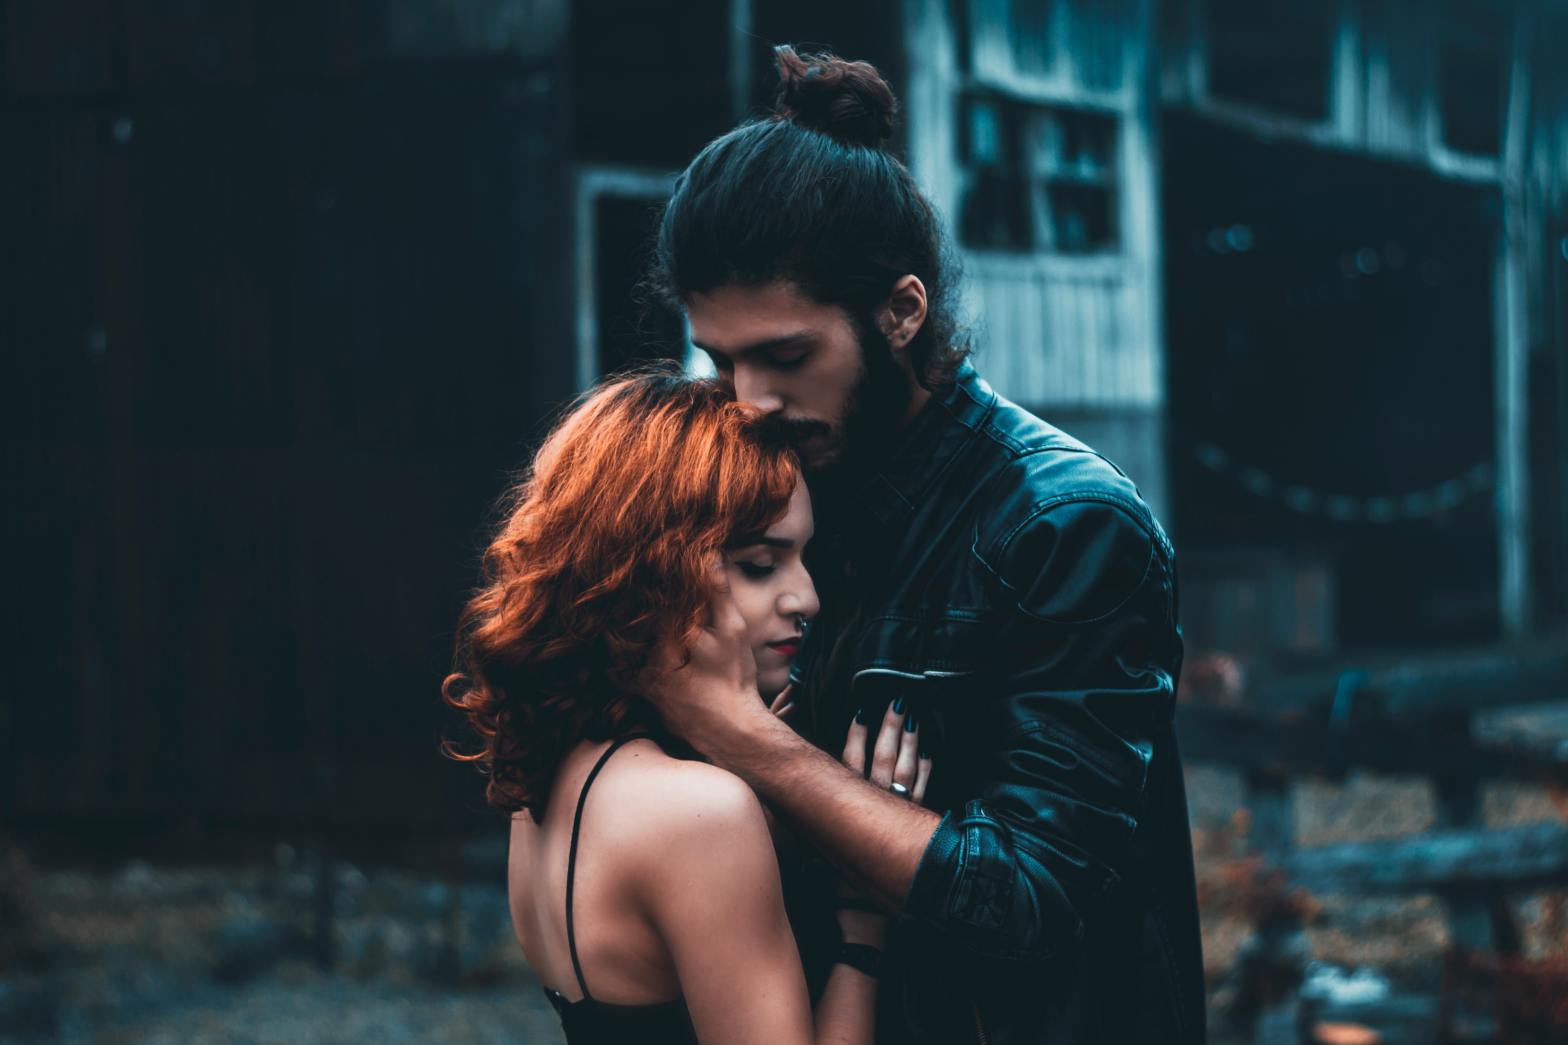 shallow focus photography of man and woman hugging by Allan Filipe Santos Dias on Unsplash